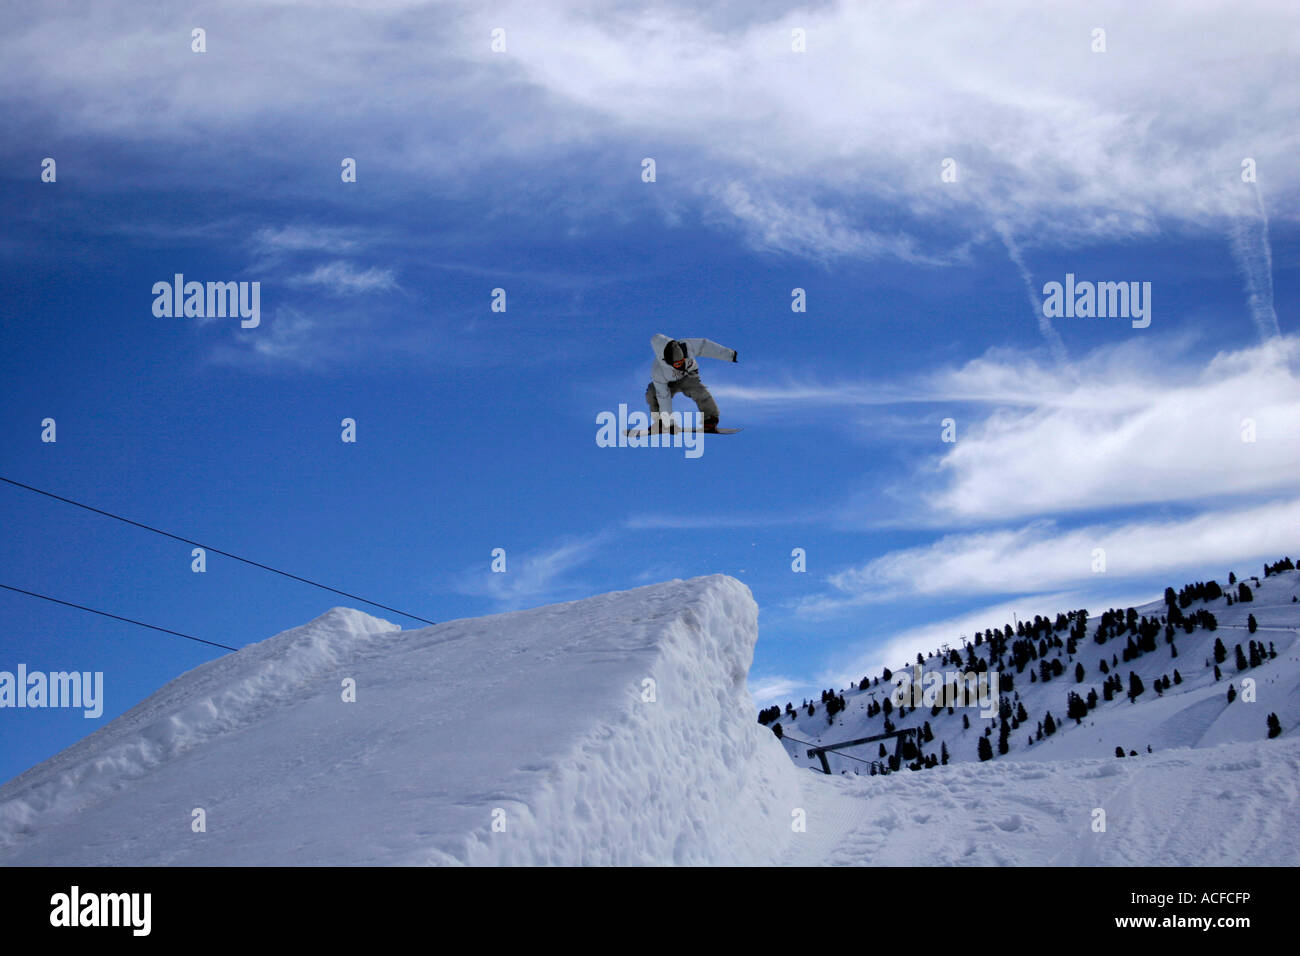 Burton snowboard park, Austria Foto de stock